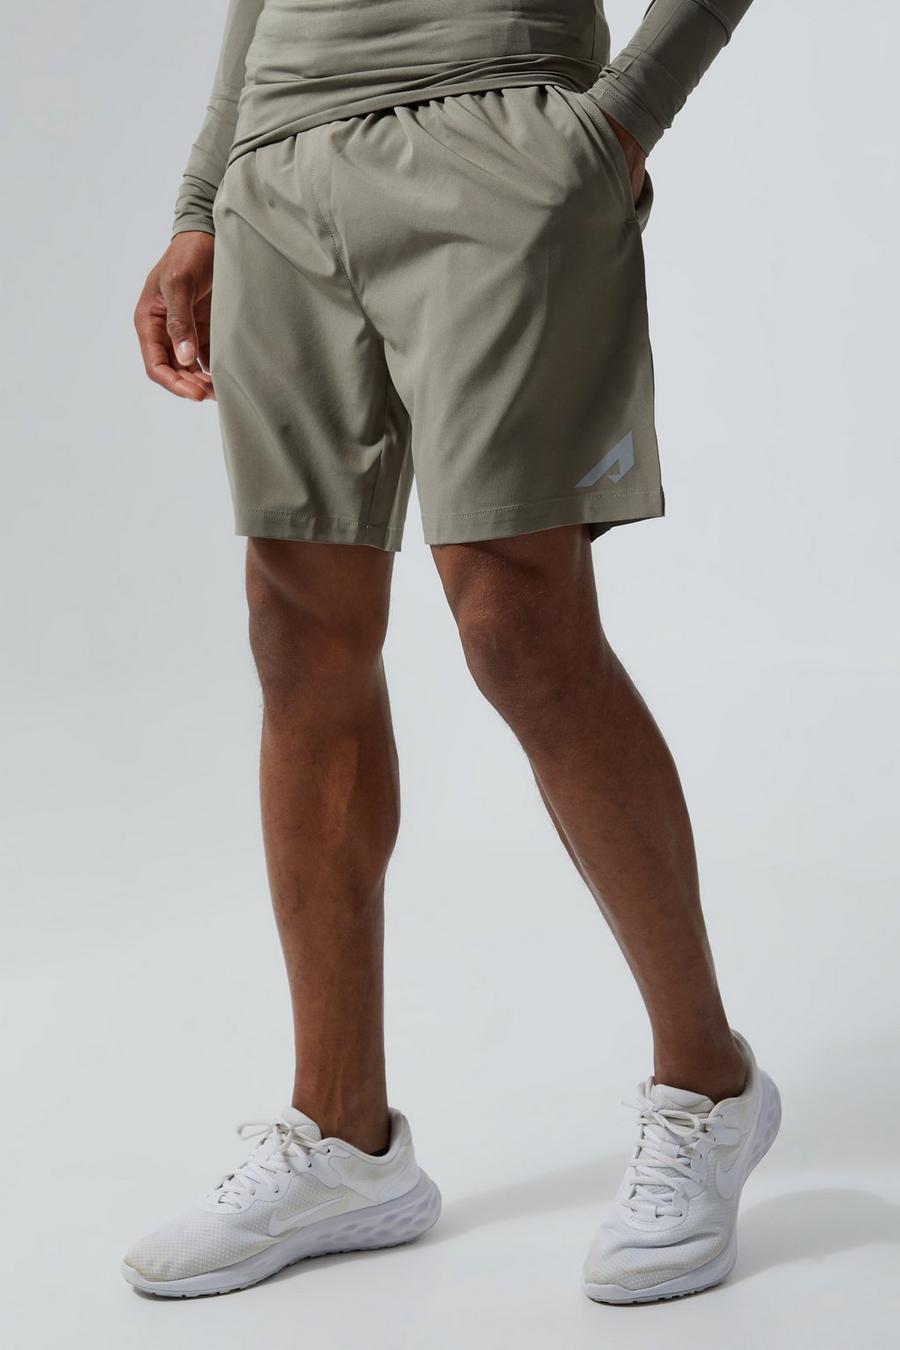 Khaki Active 7 Inch Fast Dry Shorts